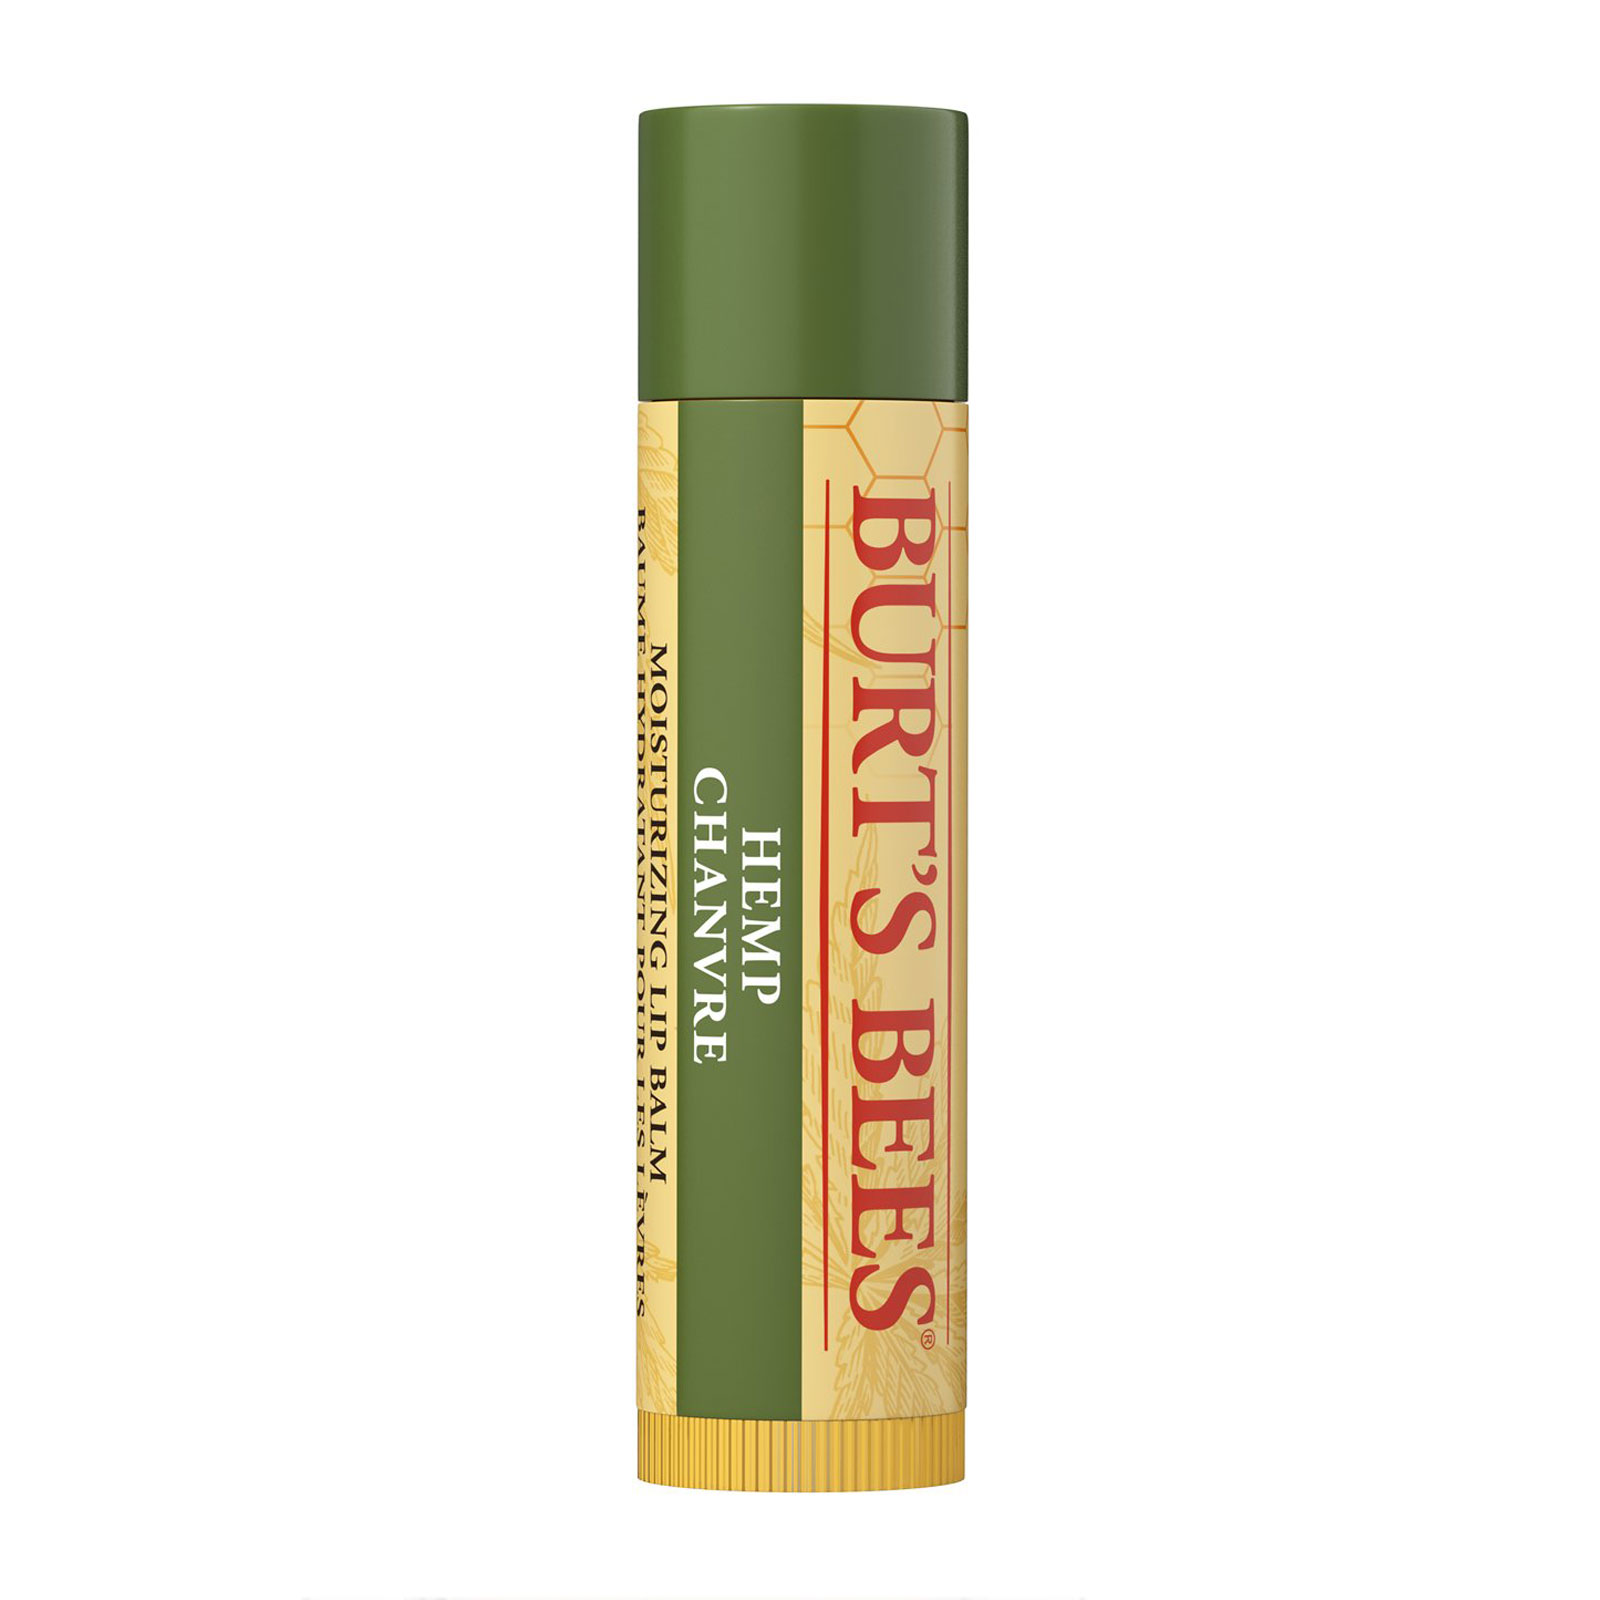 Burt's Bees 小蜜蜂 100%天然蜂蜡大麻籽油润唇膏 4.25g